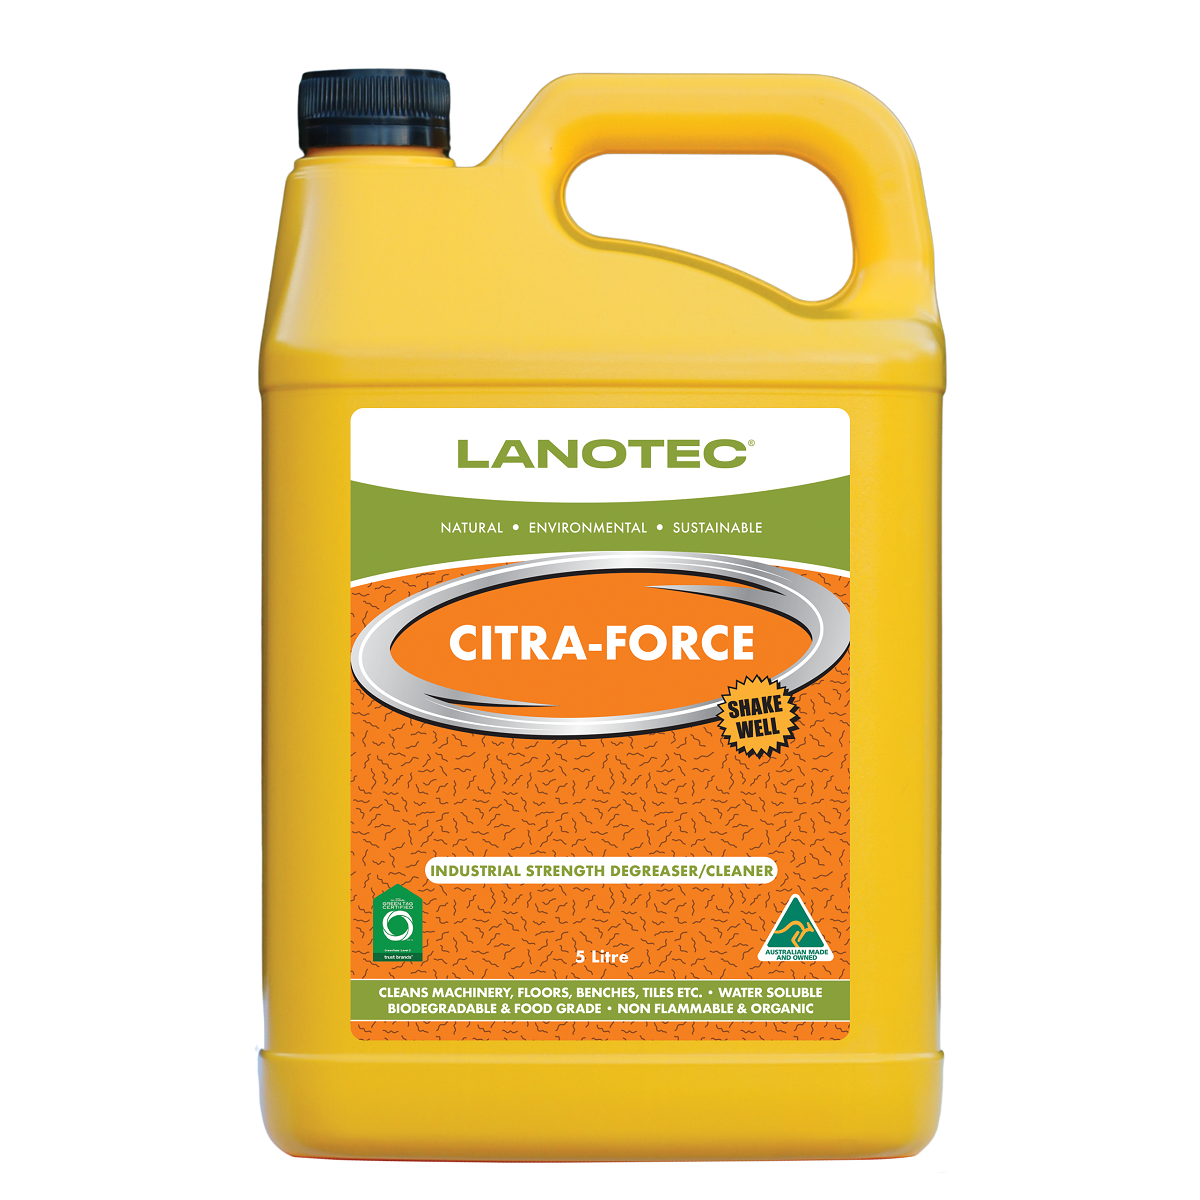 Lanotec Citra-Force - 5 litre | Lanotec